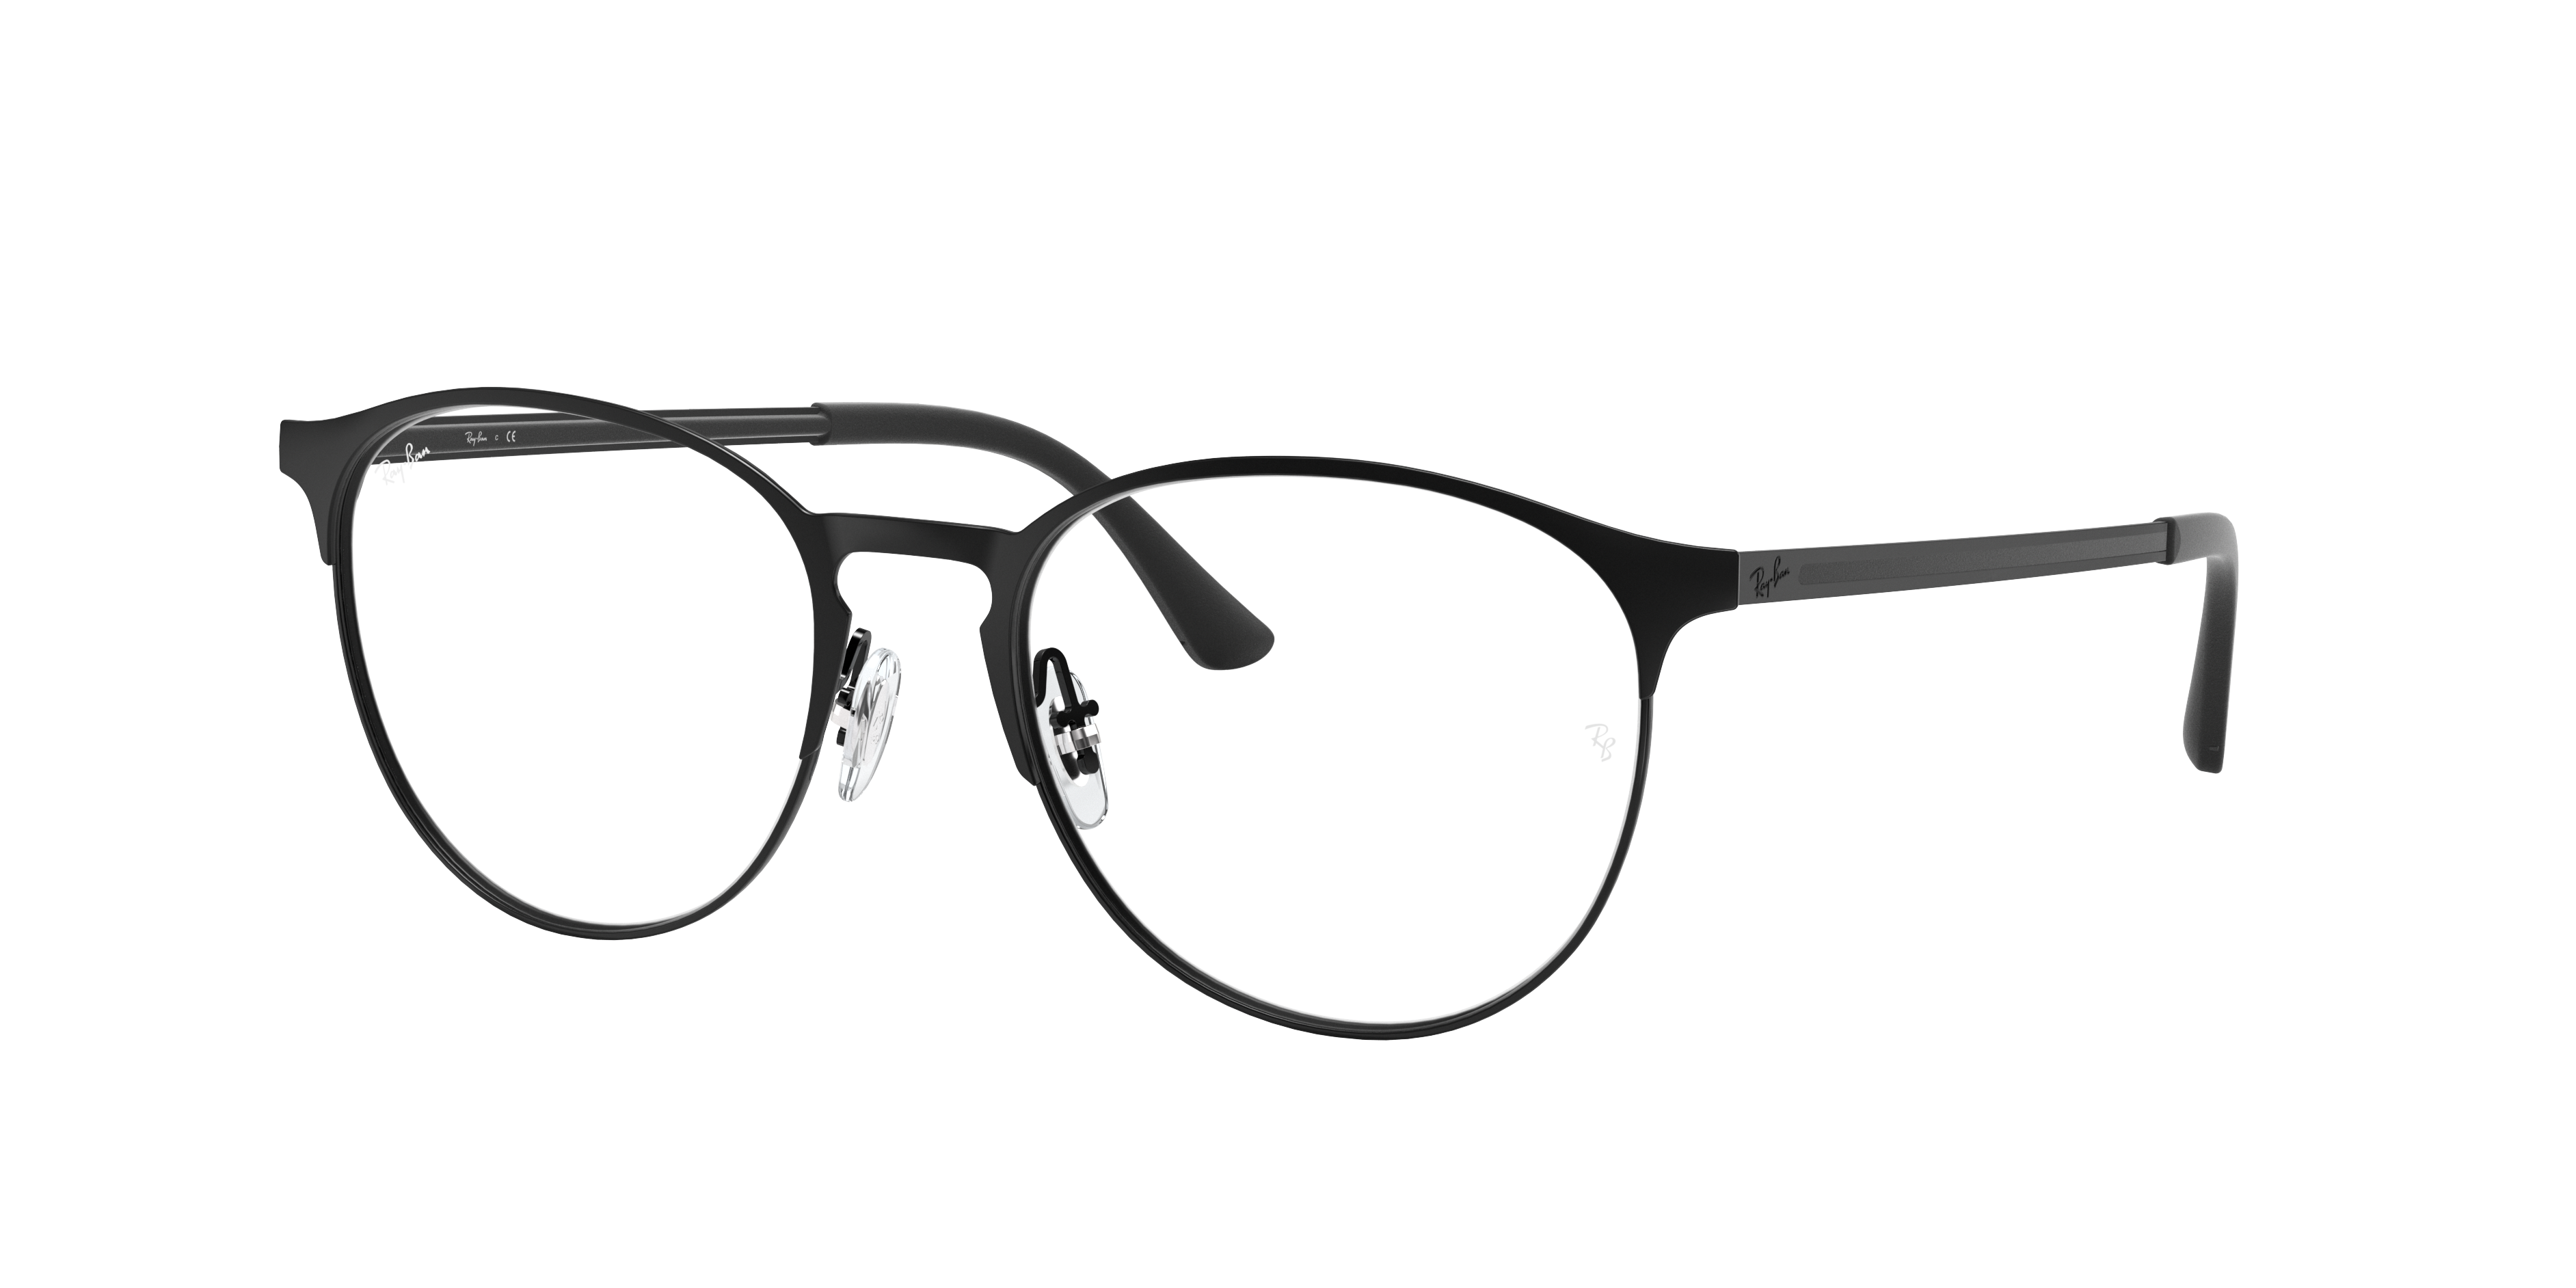 Rb6375 Optics Eyeglasses with Black Frame | Ray-Ban®